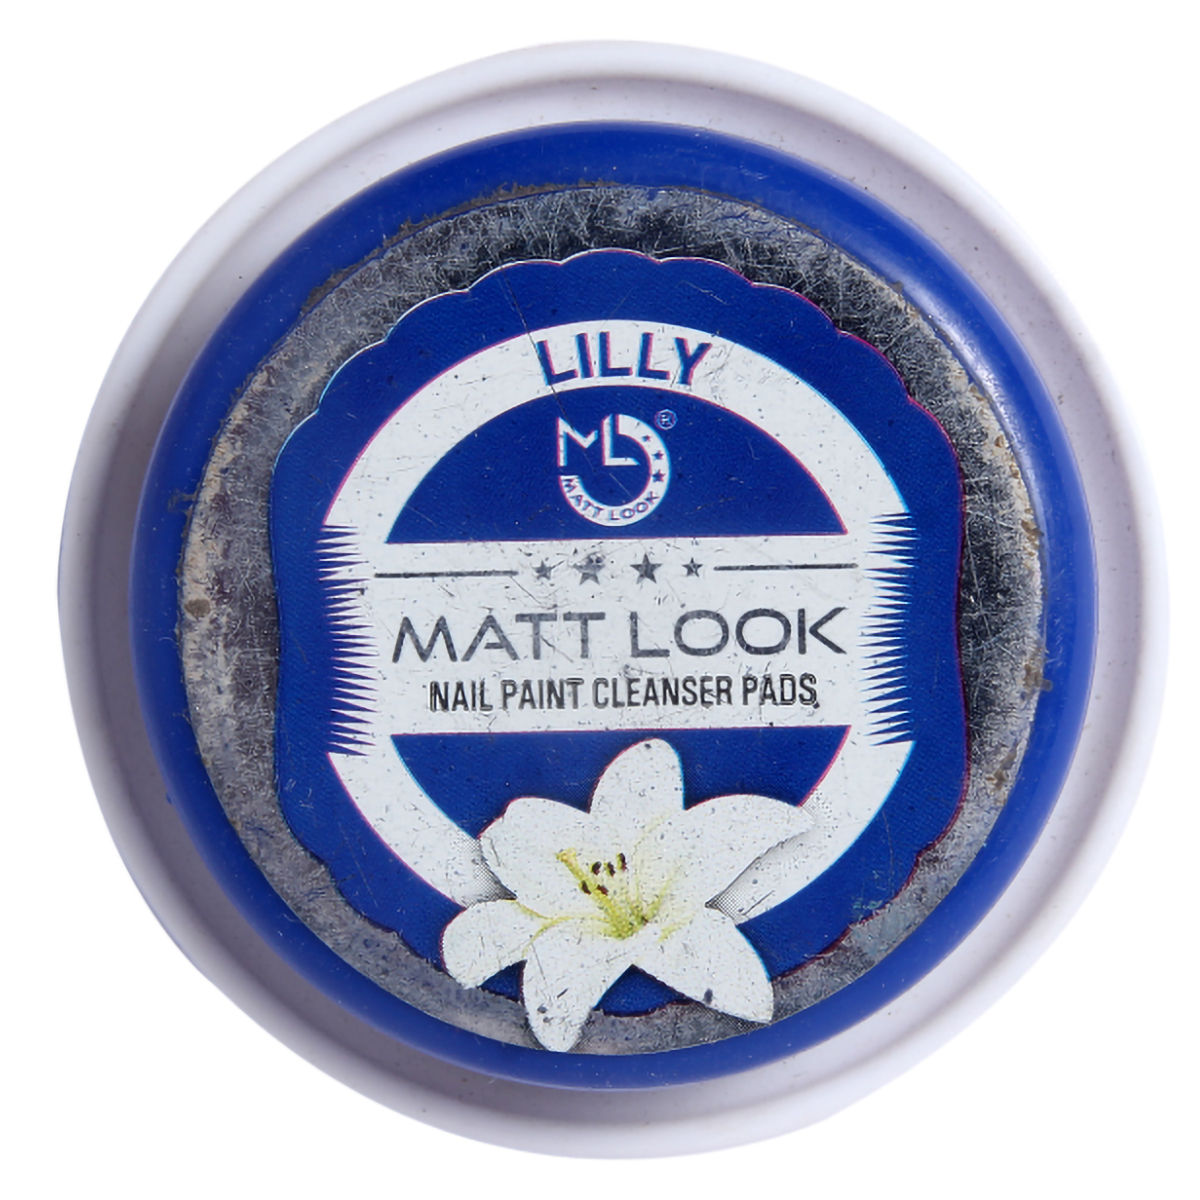 Buy Matt Look Nail Paint Cleanser Pads, 30 Count Online